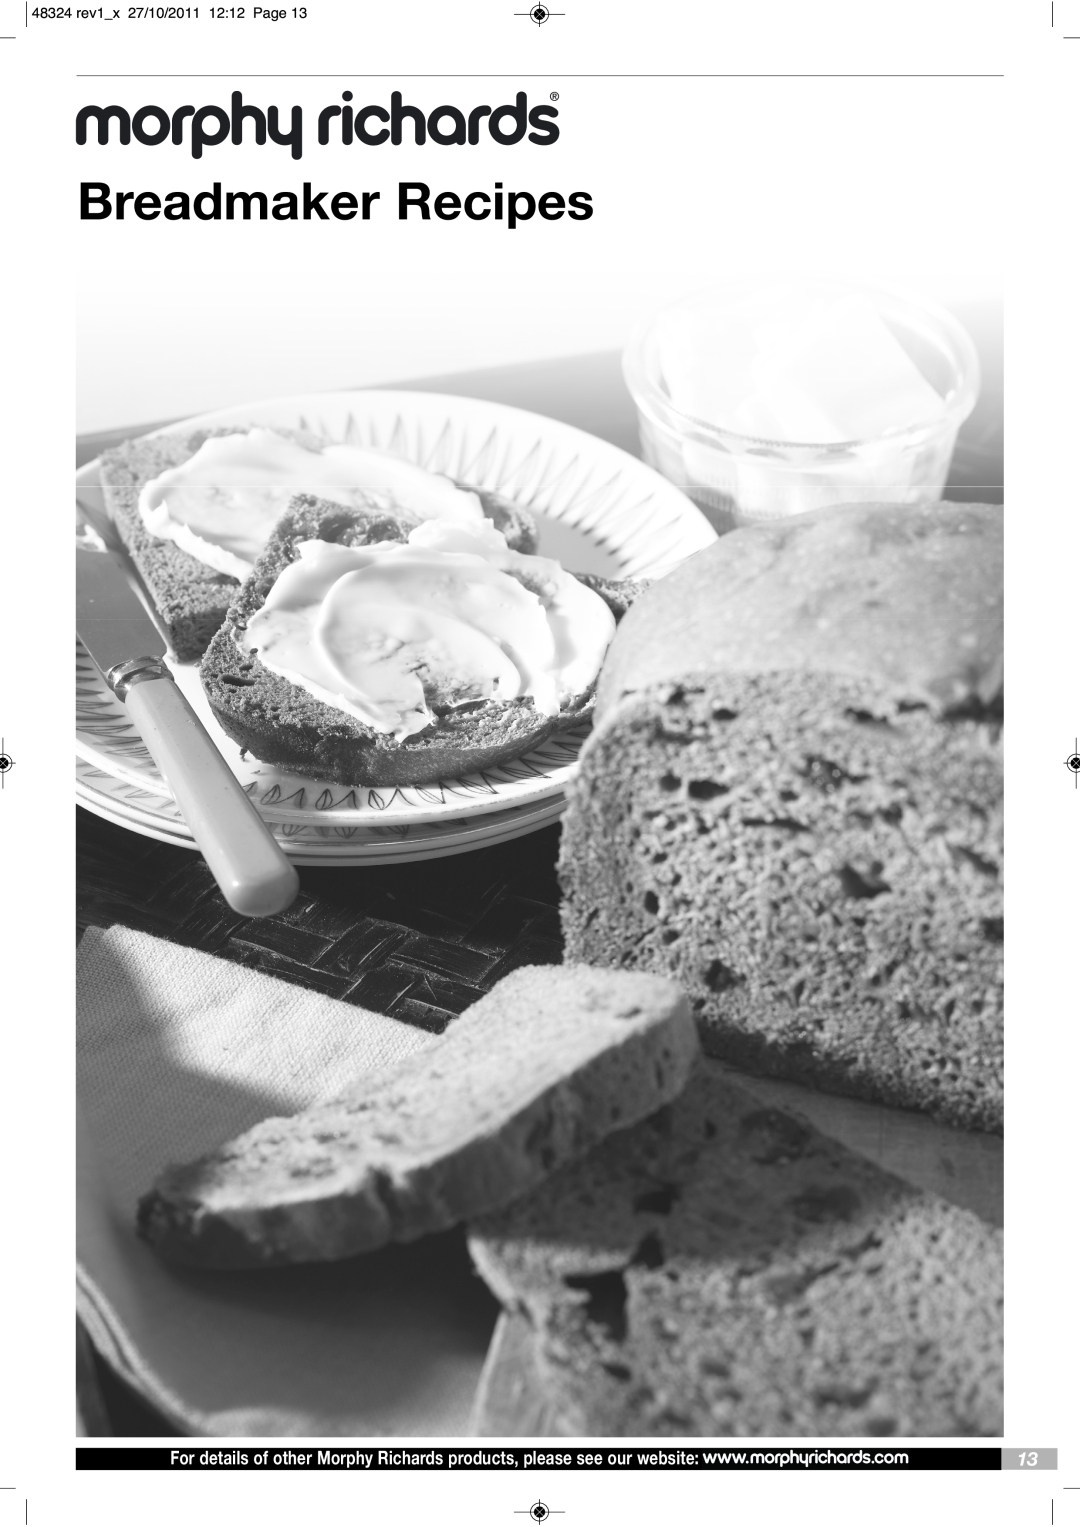 Morphy Richards BM48324 manual Breadmaker Recipes, 48324 rev1_x 27/10/2011 12:12 Page 